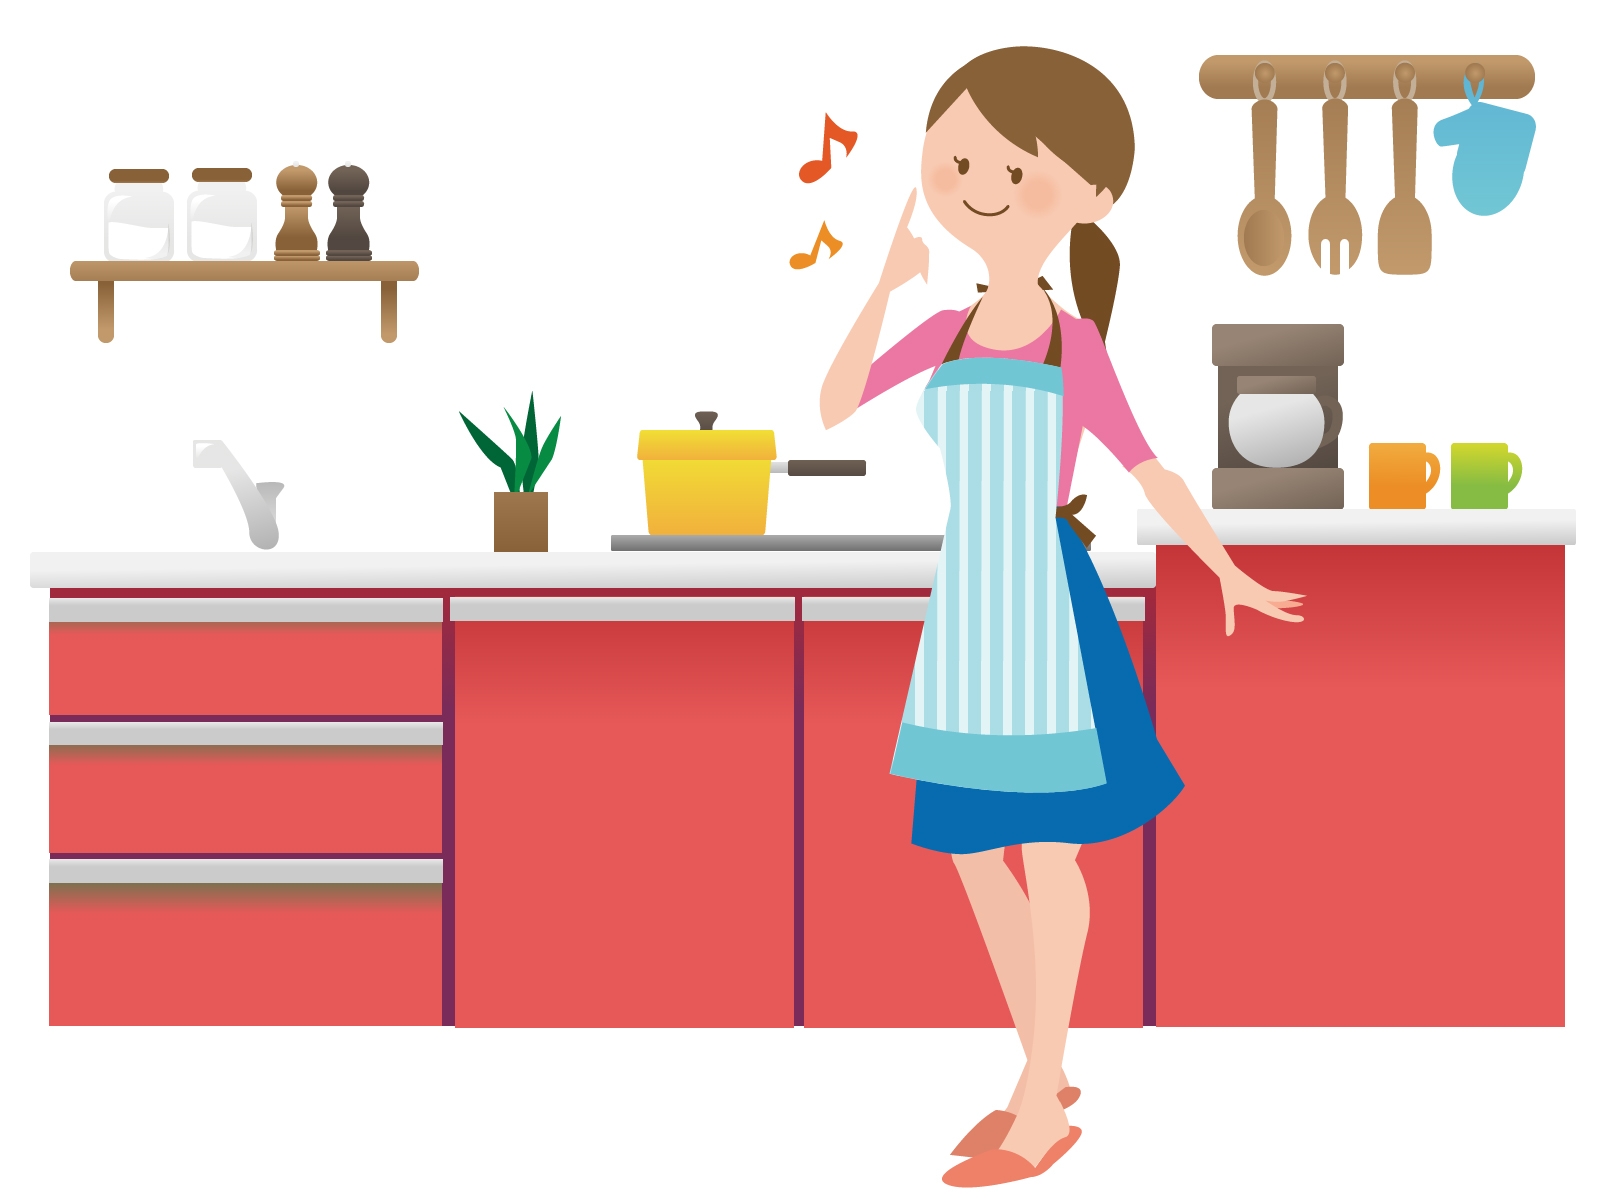 Женщина на кухне